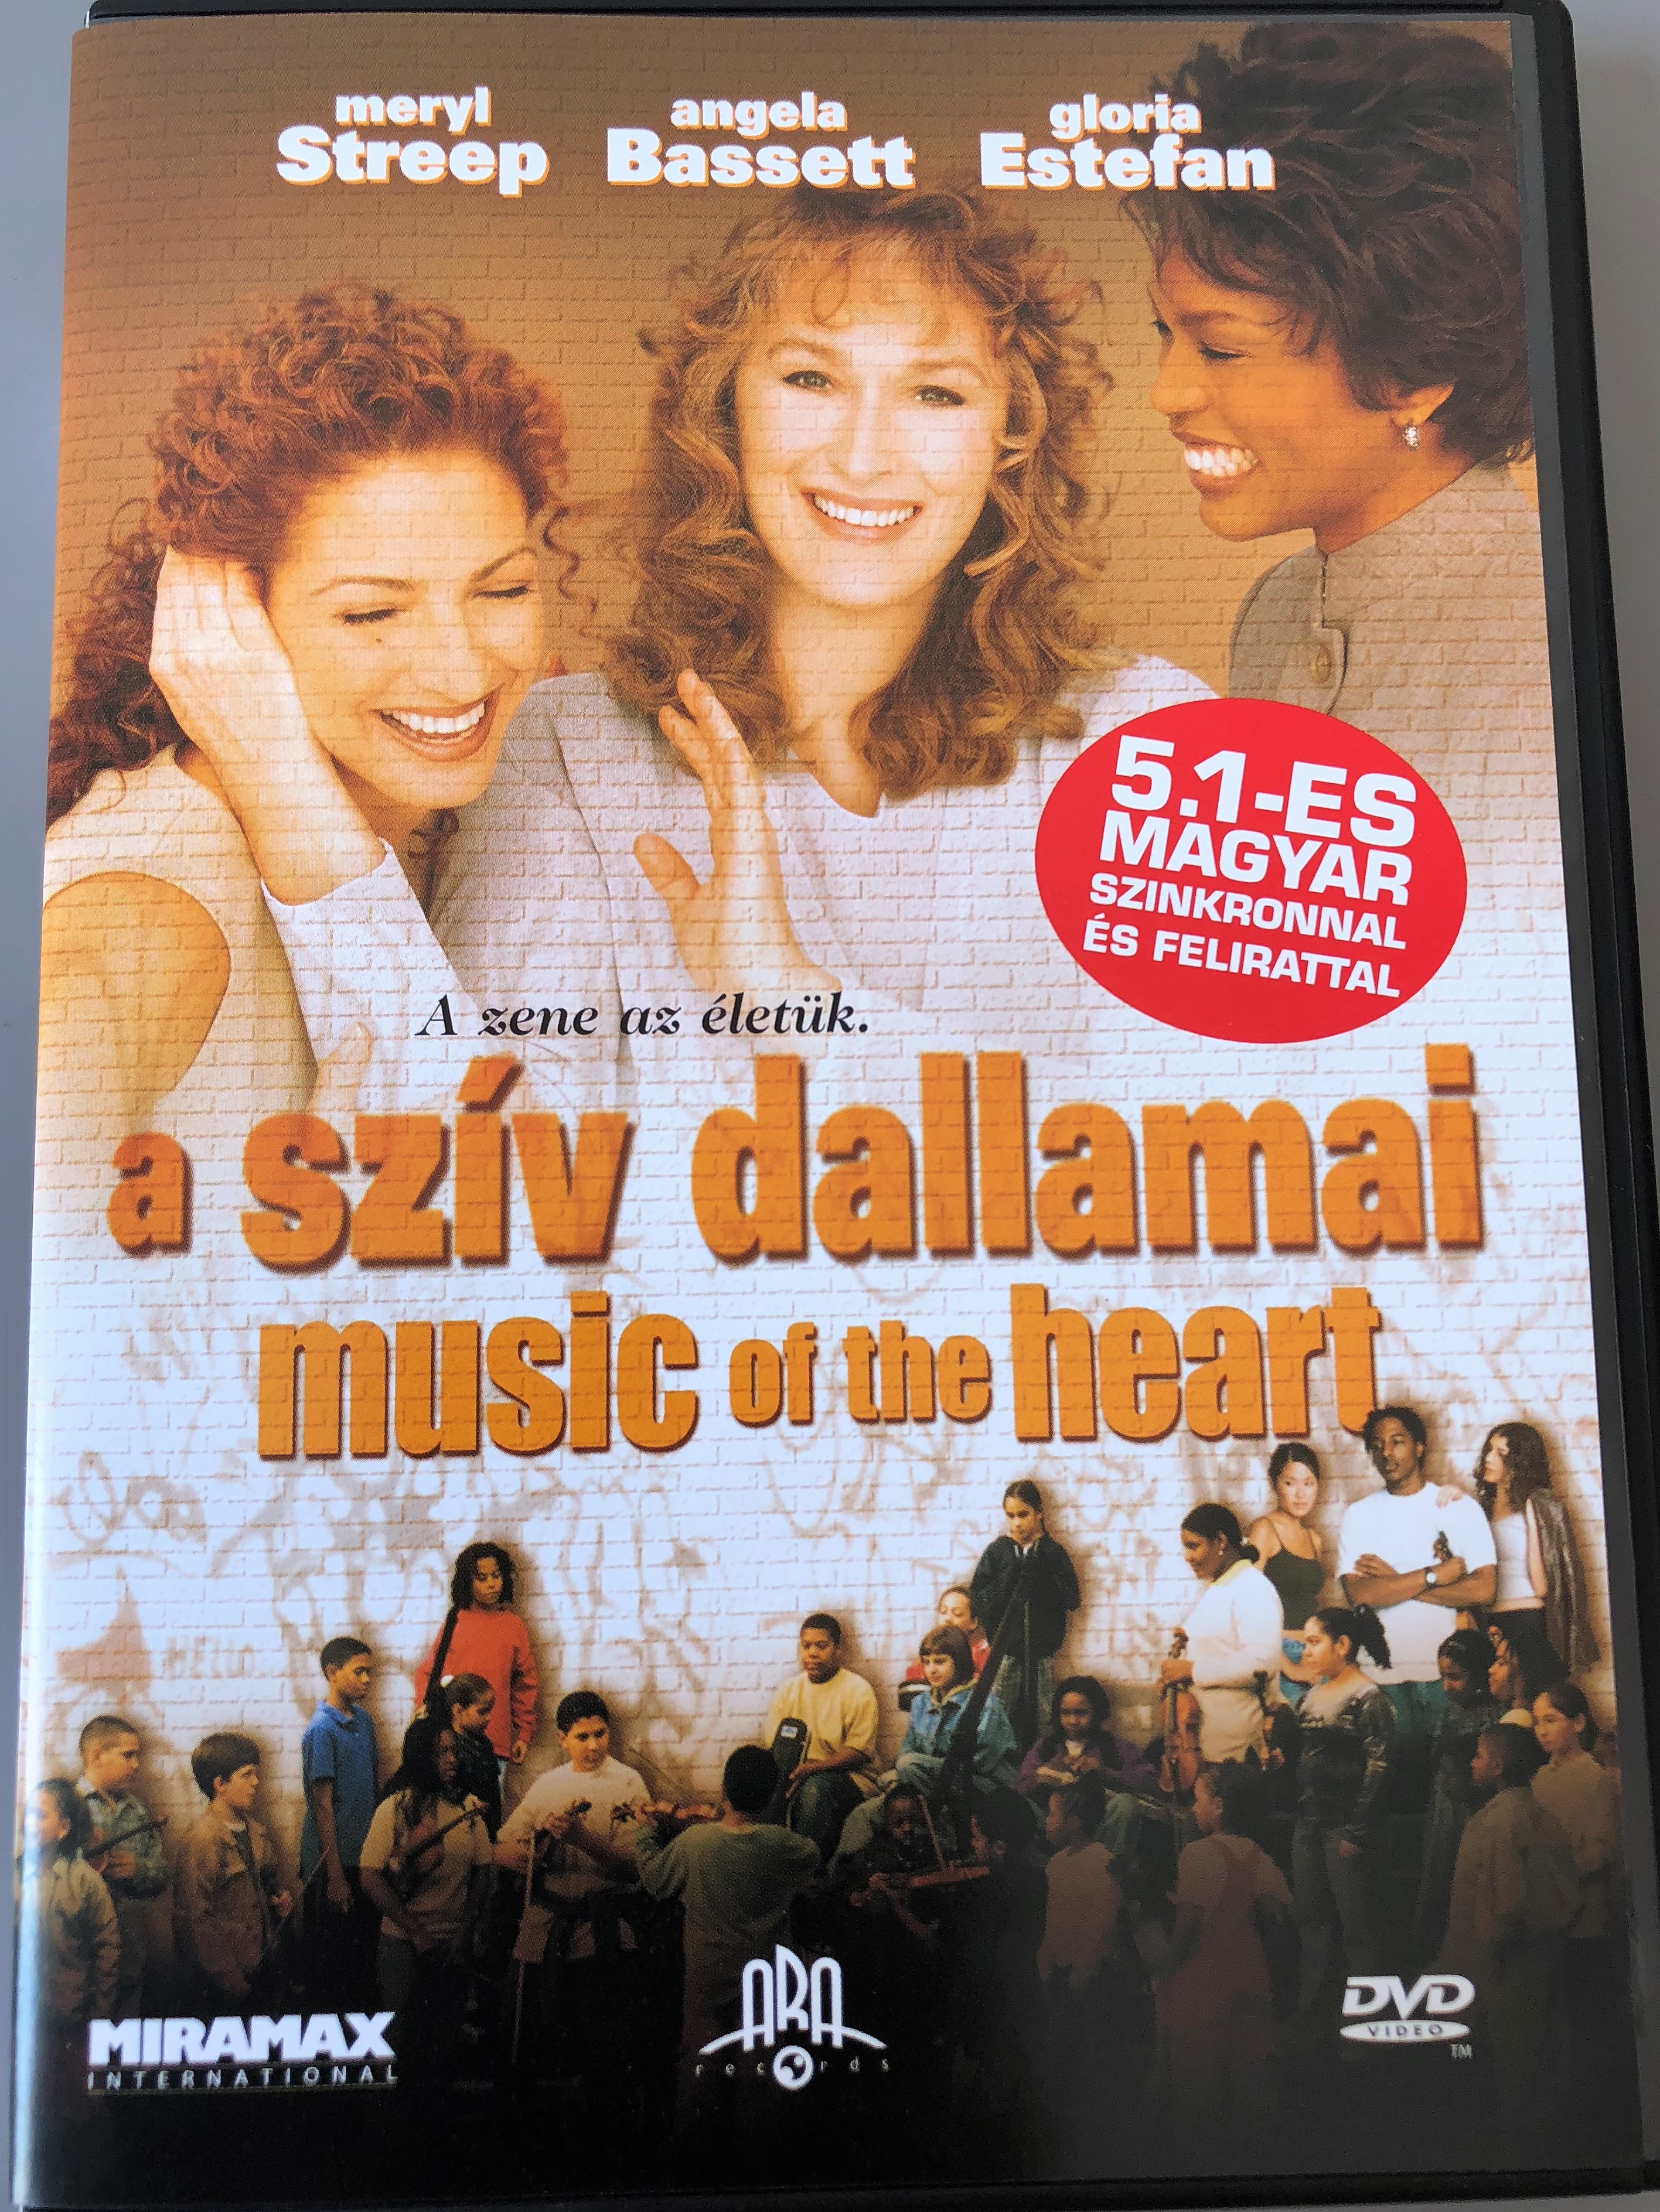 music-of-the-heart-dvd-1999-a-sz-v-dallamai-directed-by-wes-craven-starring-meryl-streep-aidan-quinn-angela-bassett-gloria-estefan-jane-leeves-1-.jpg